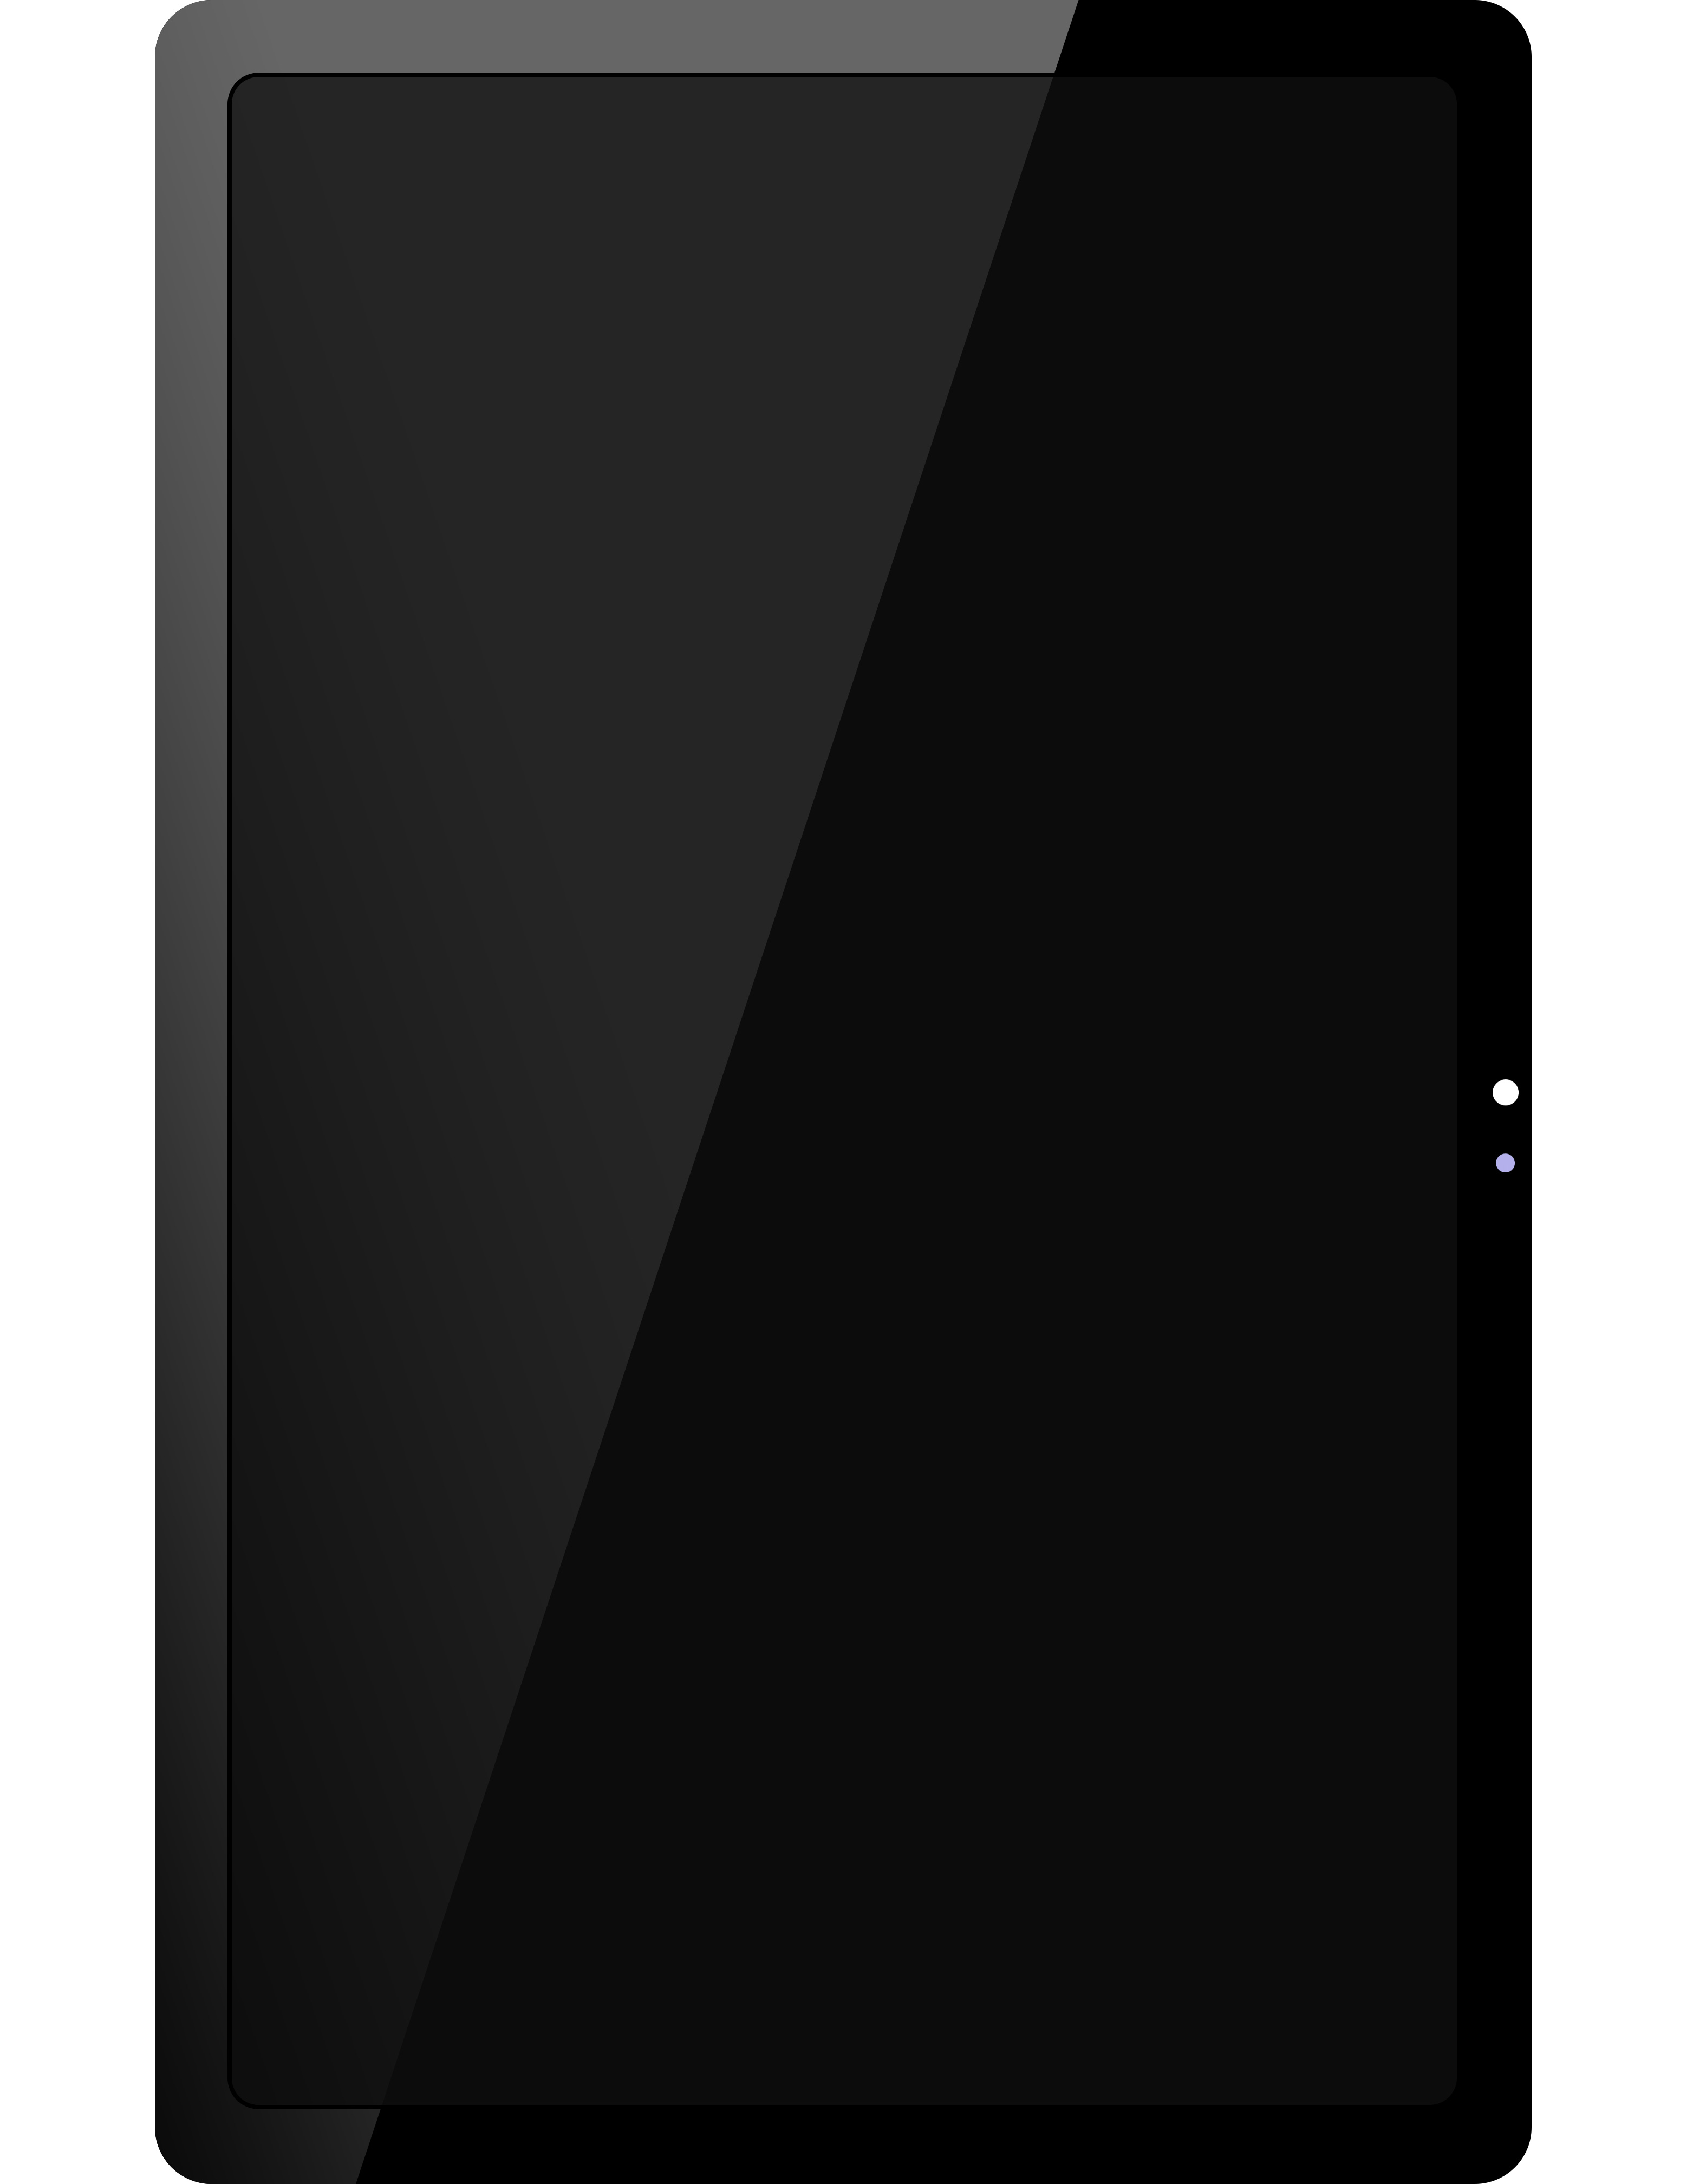 Samsung Galaxy Tab A7 10.4 (2020) Black LCD Display Module